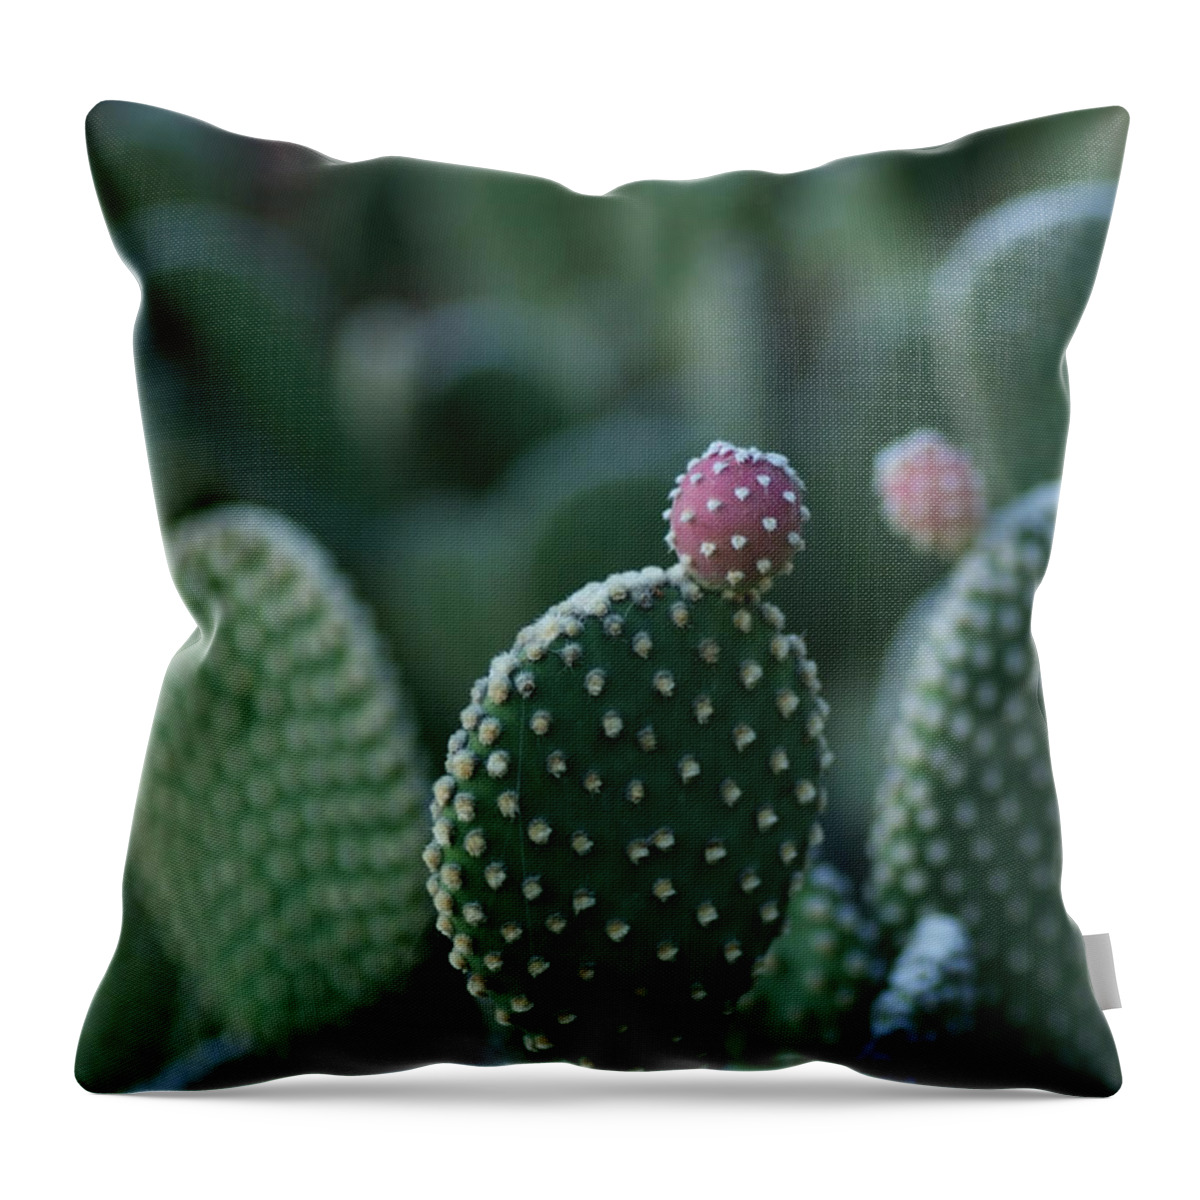 Cactus Throw Pillow featuring the photograph Morning Cactus by Michael McGowan